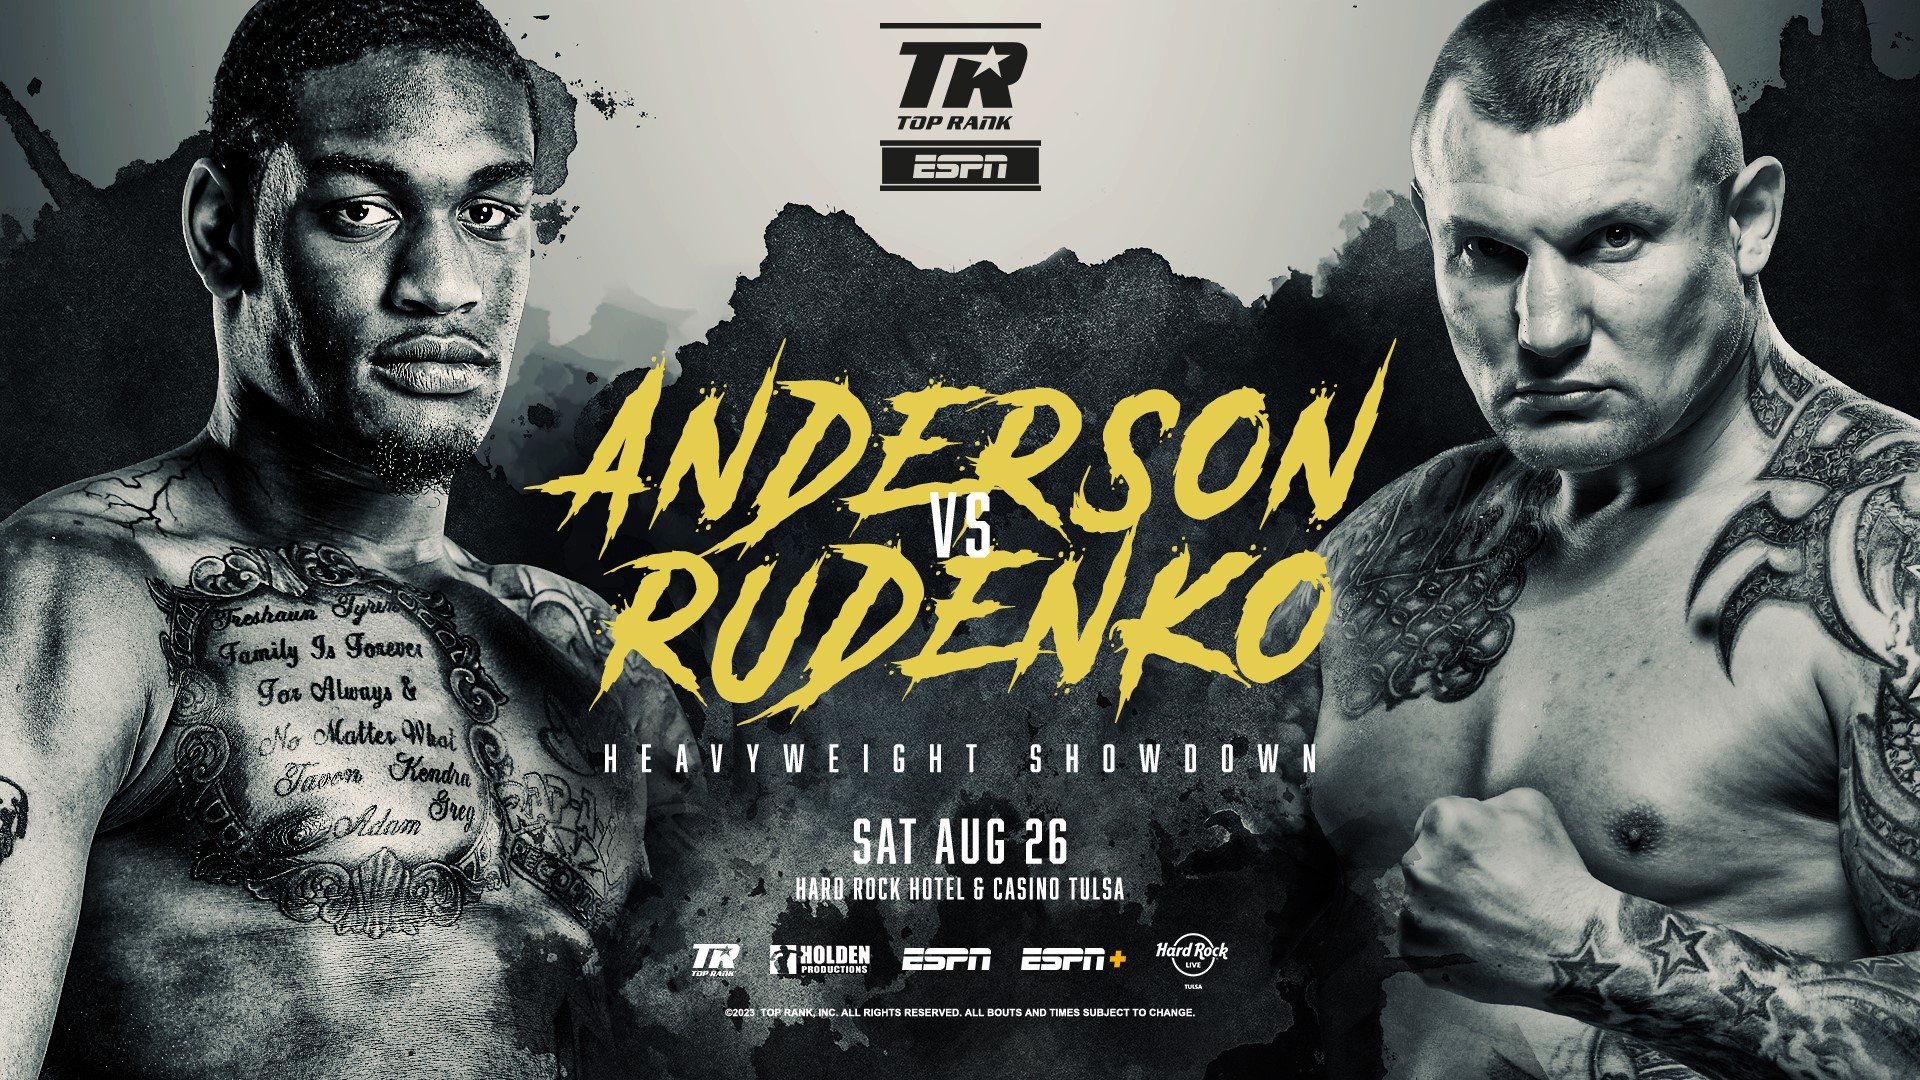 Top Rank Boxing returns to Tulsa with Jared Anderson-Andriy Rudenko Heavyweight Showdown Aug